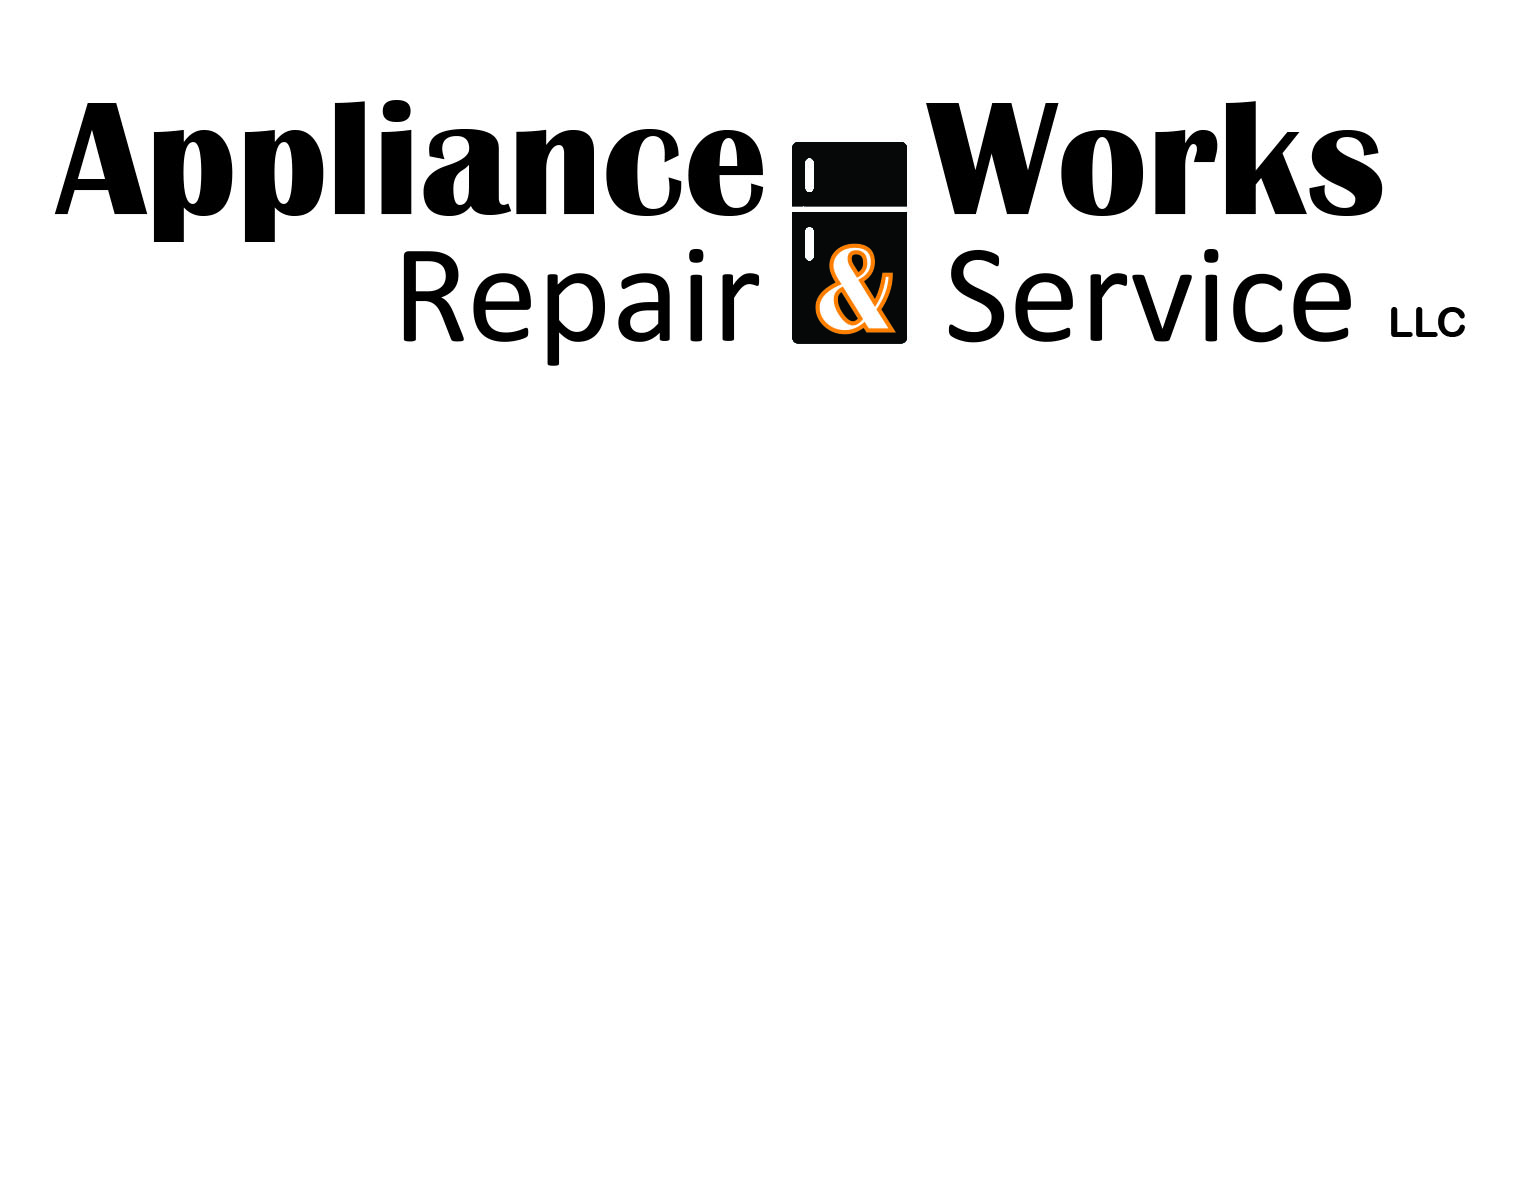 Appliance Works Repair & Service LLC 281 Union Mills Rd, Broadalbin New York 12025